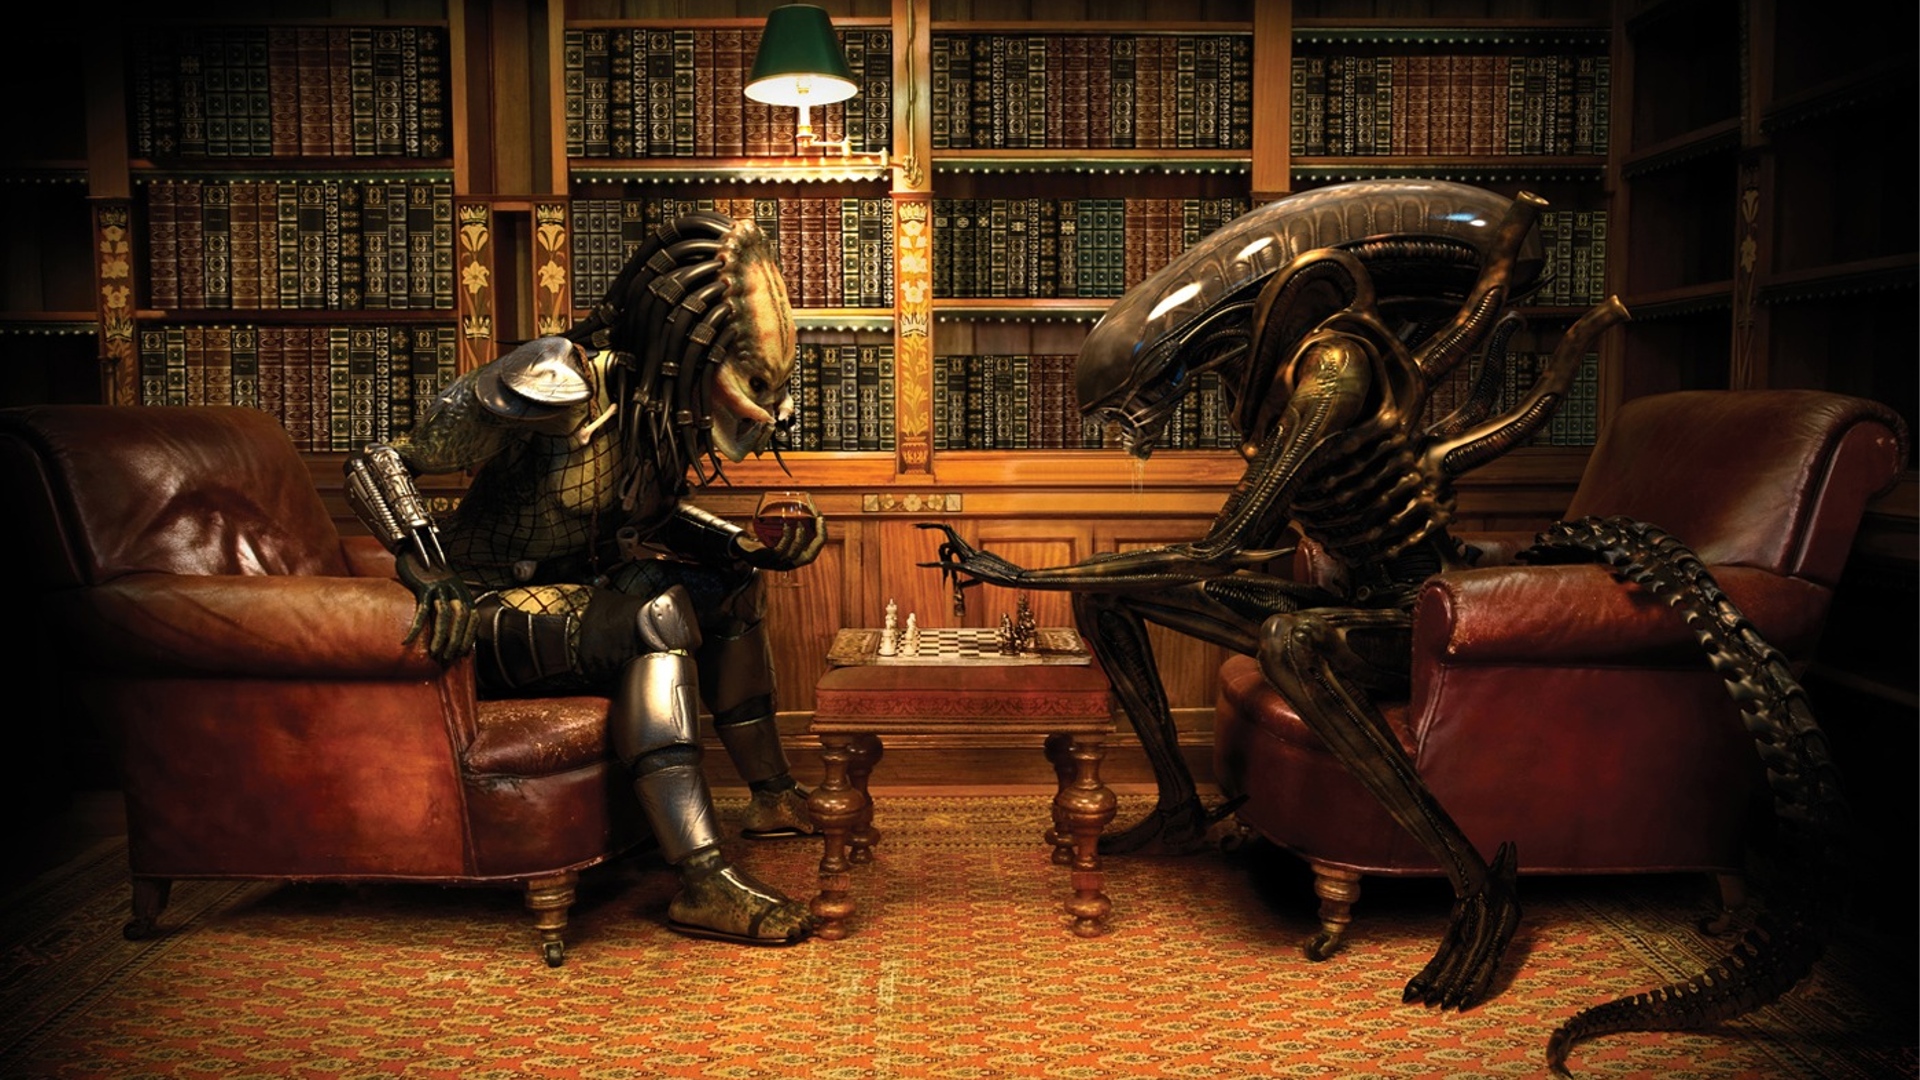 predator, chess, library, books, predators, bookshelf, Alien, Aliens, Aliens vs Predator game - desktop wallpaper